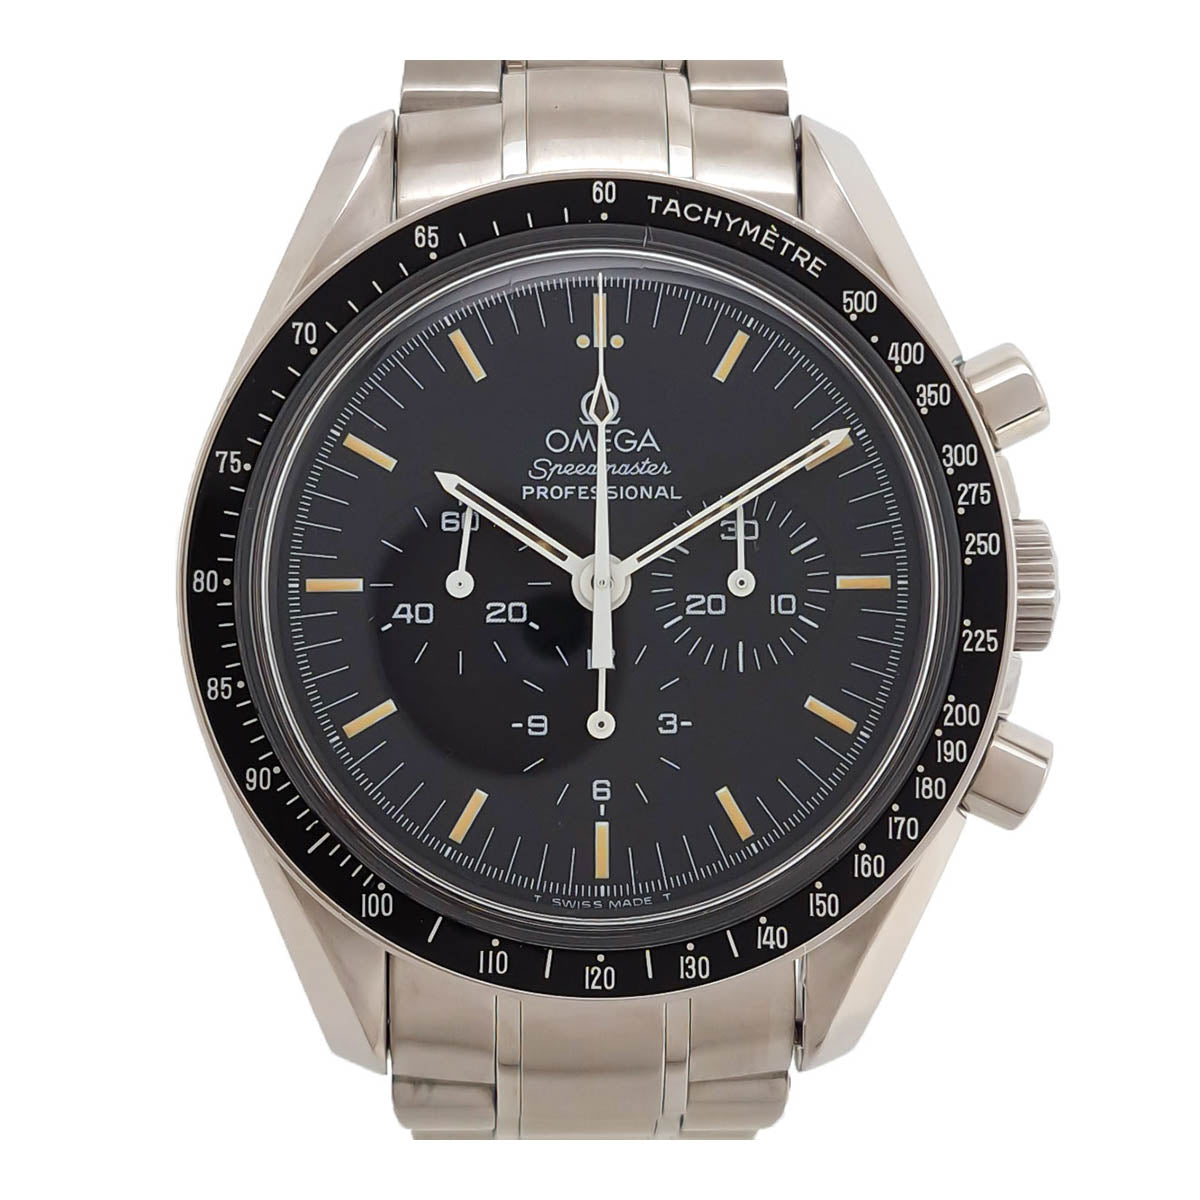 Manual Speedmaster Professional Wrist Watch ST145.022